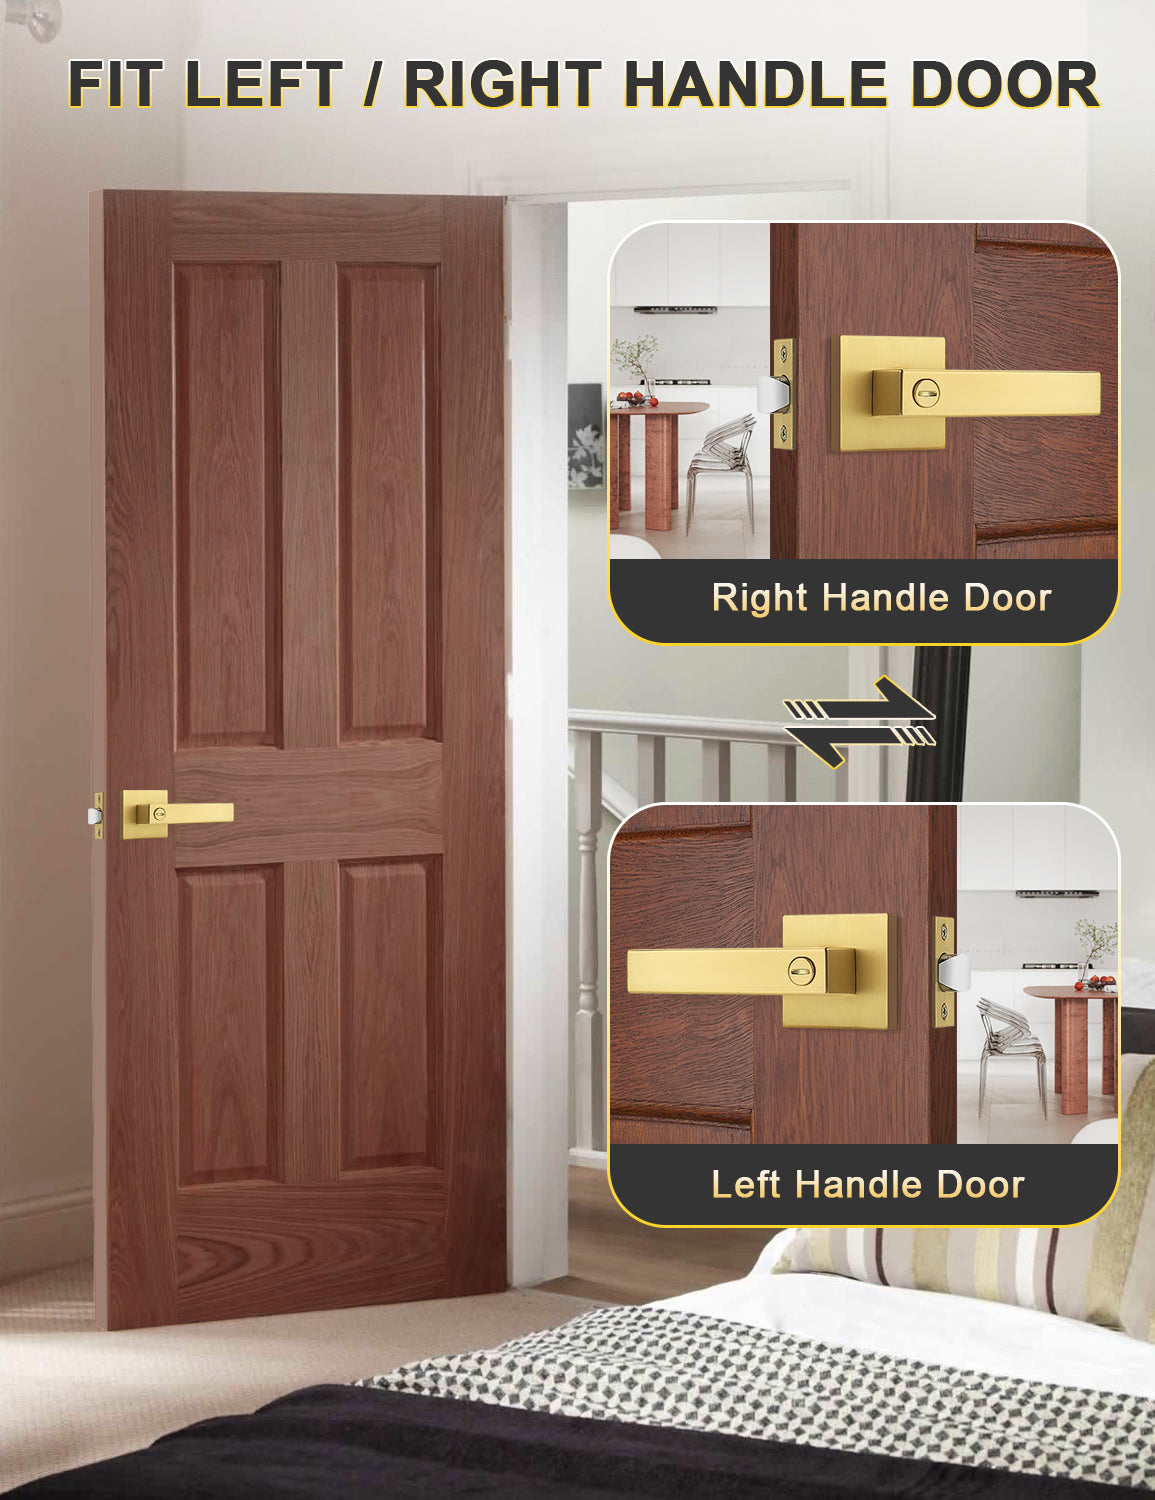 Tinewa 5 Pack Heavy Duty Gold Square Privacy Interior Door Levers Bedroom and Bathroom Door Handles Keyless Bed/Bath Lockset